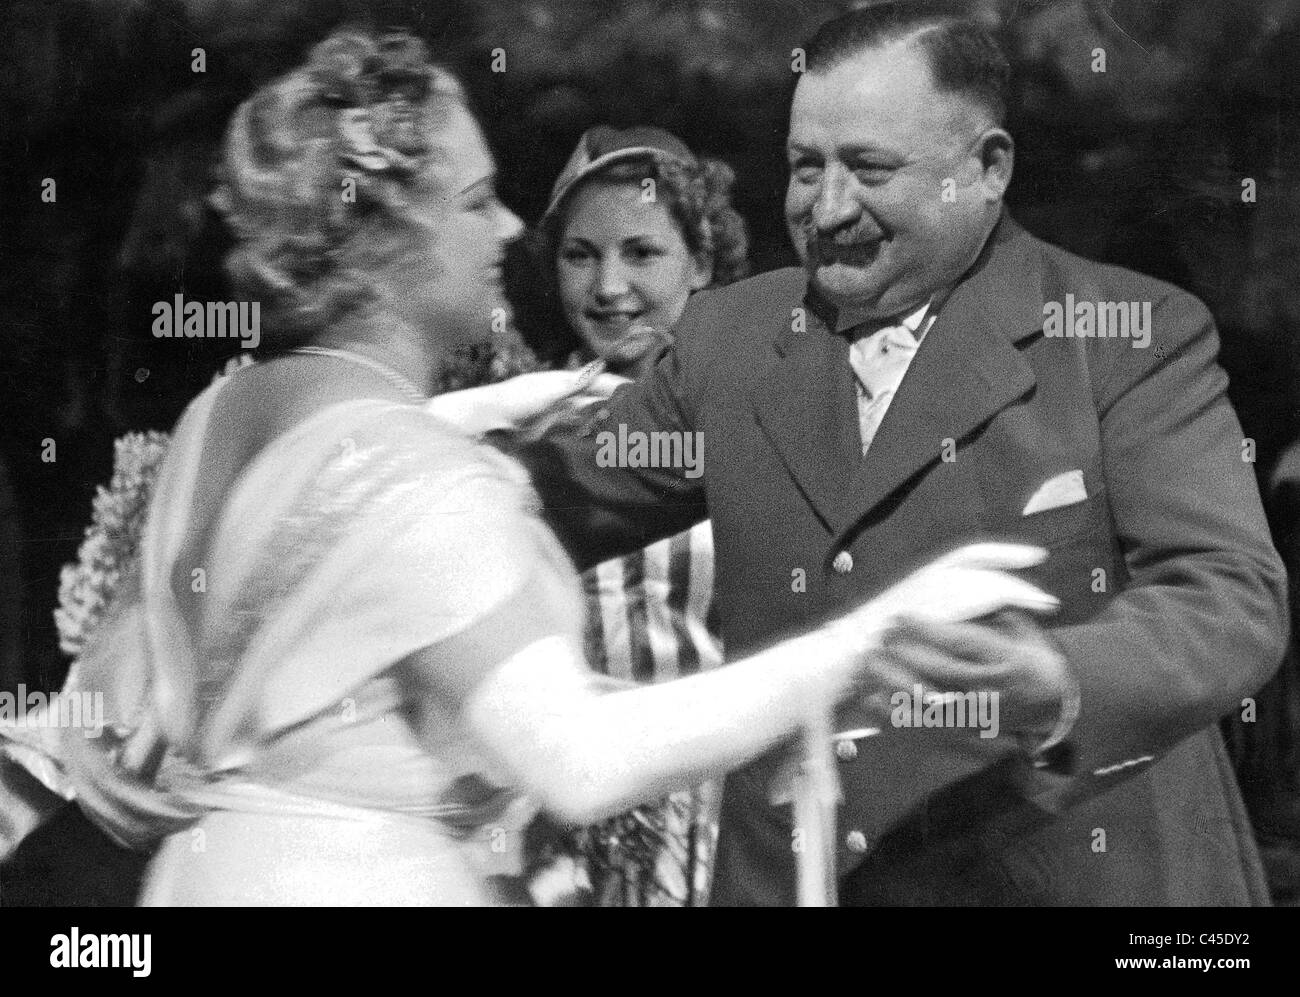 Christian Weber dances with Olga Tschechowa, 1938 Stock Photo